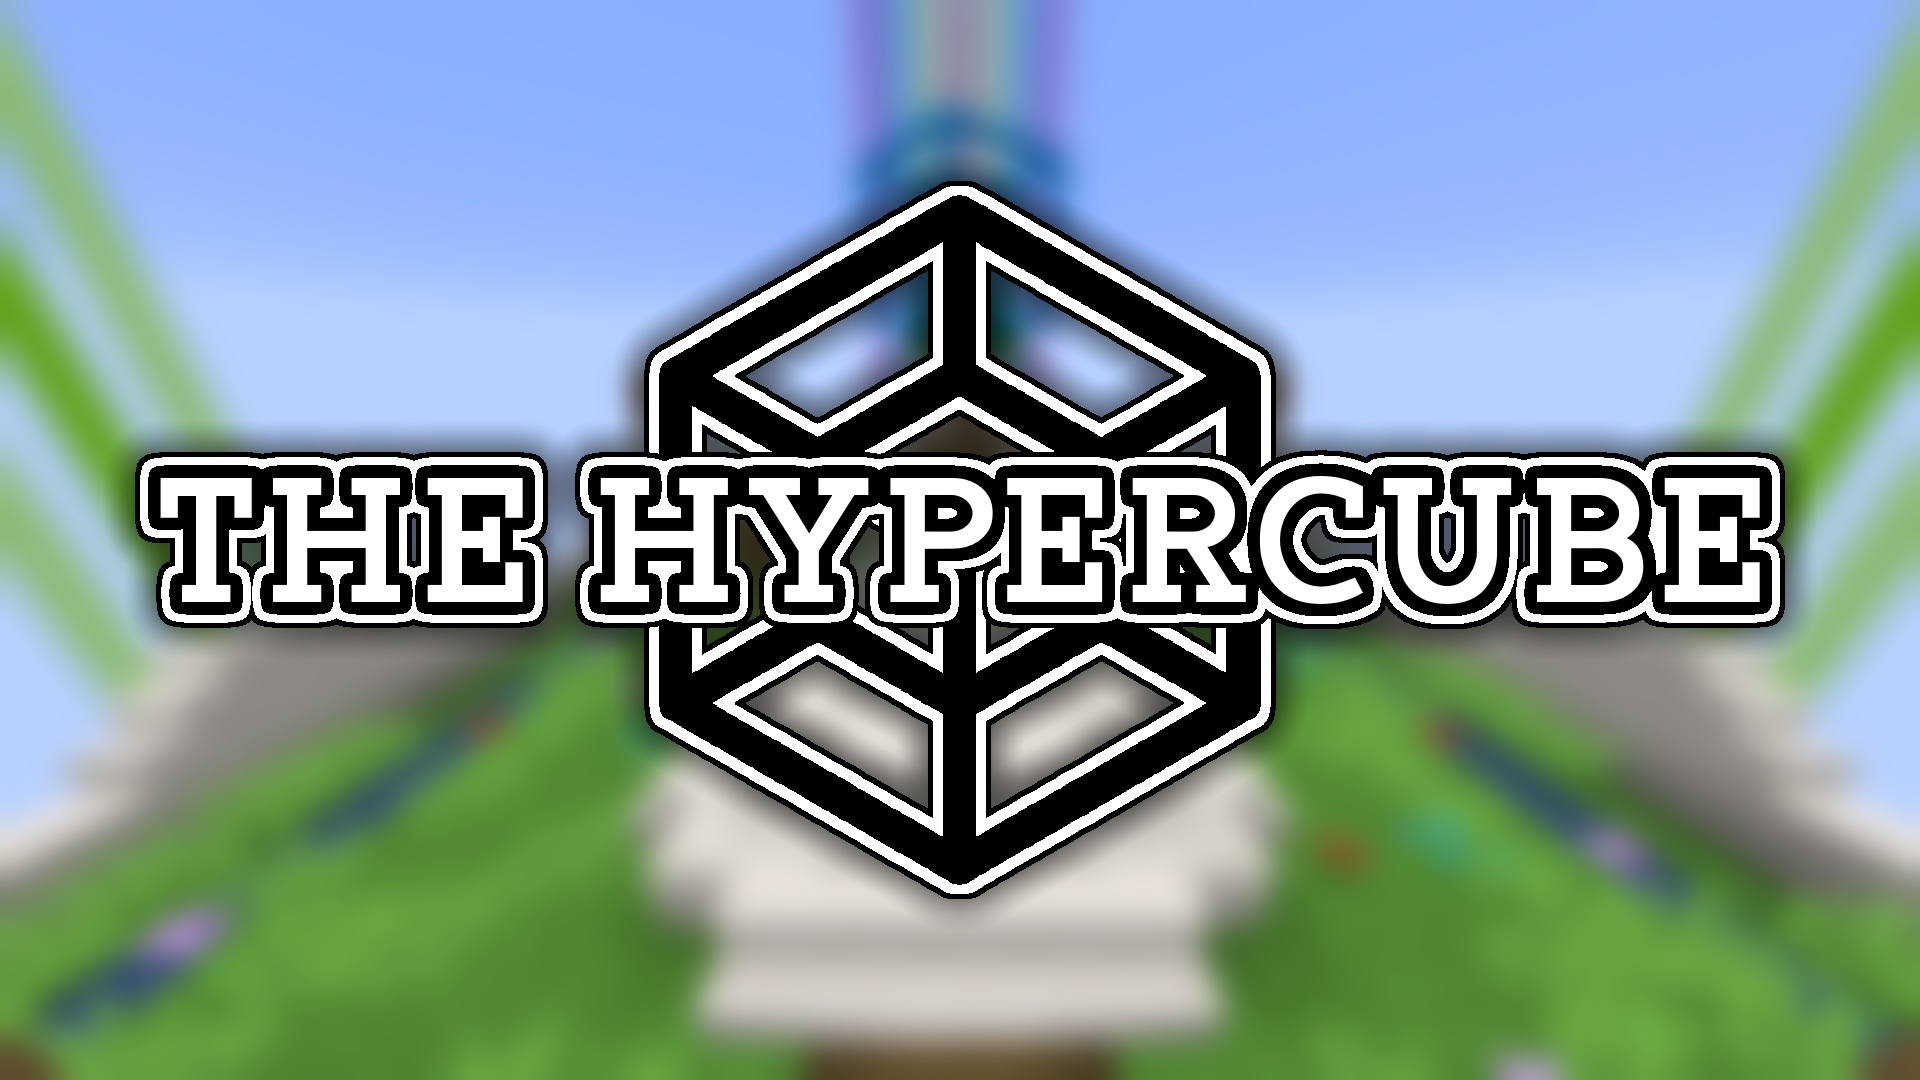 Скачать The Hypercube для Minecraft 1.14